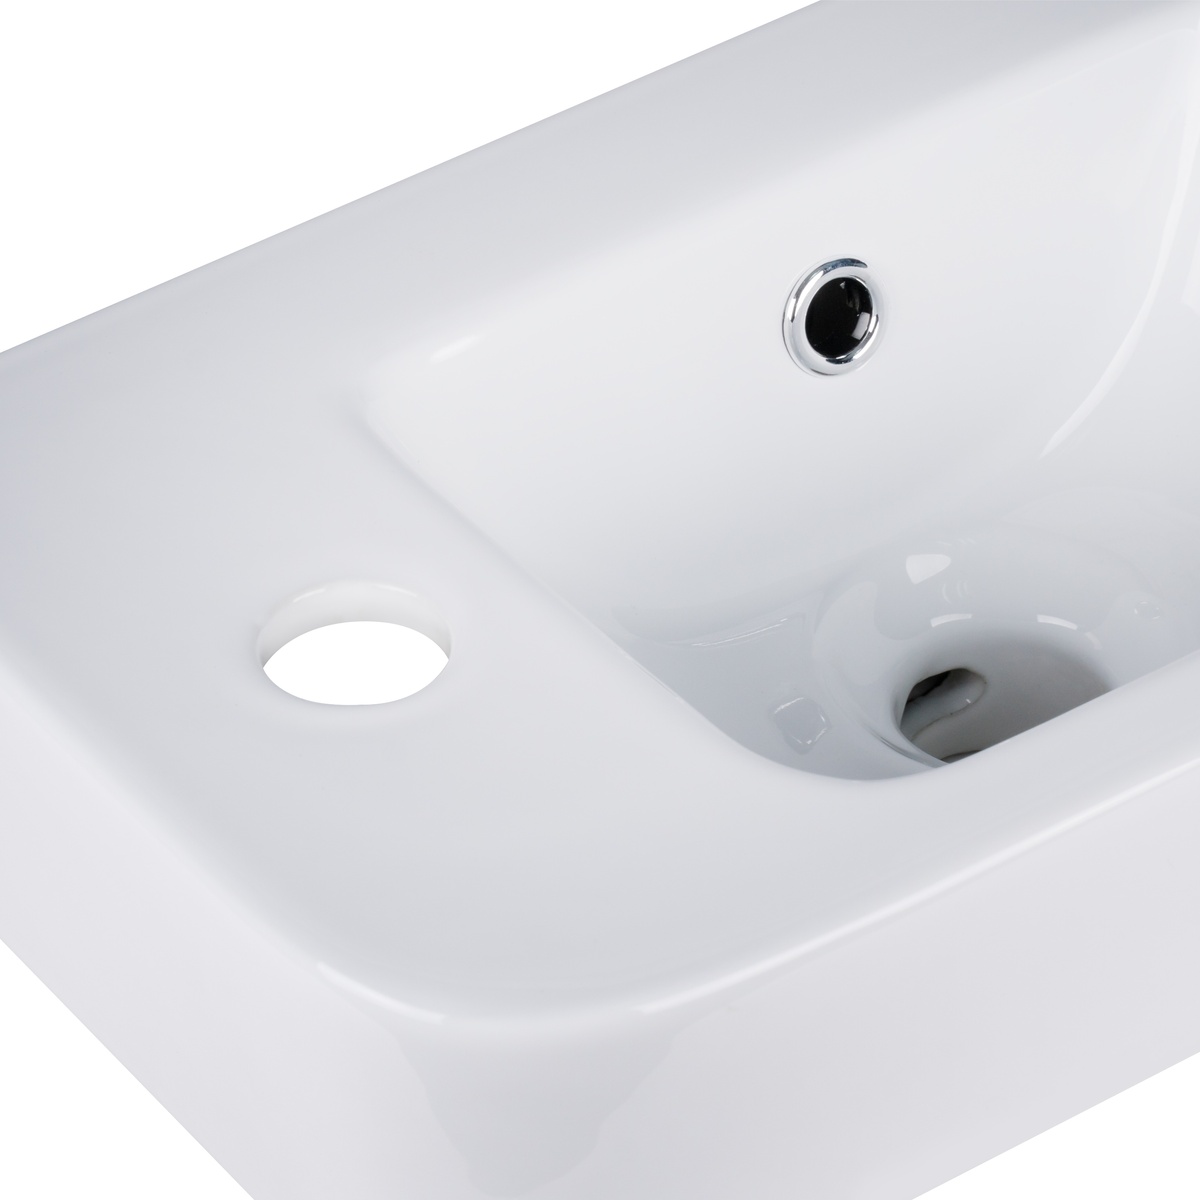 Раковина подвесная для ванной 375мм x 245мм Q-TAP Tern белый прямоугольная QT171110100LW